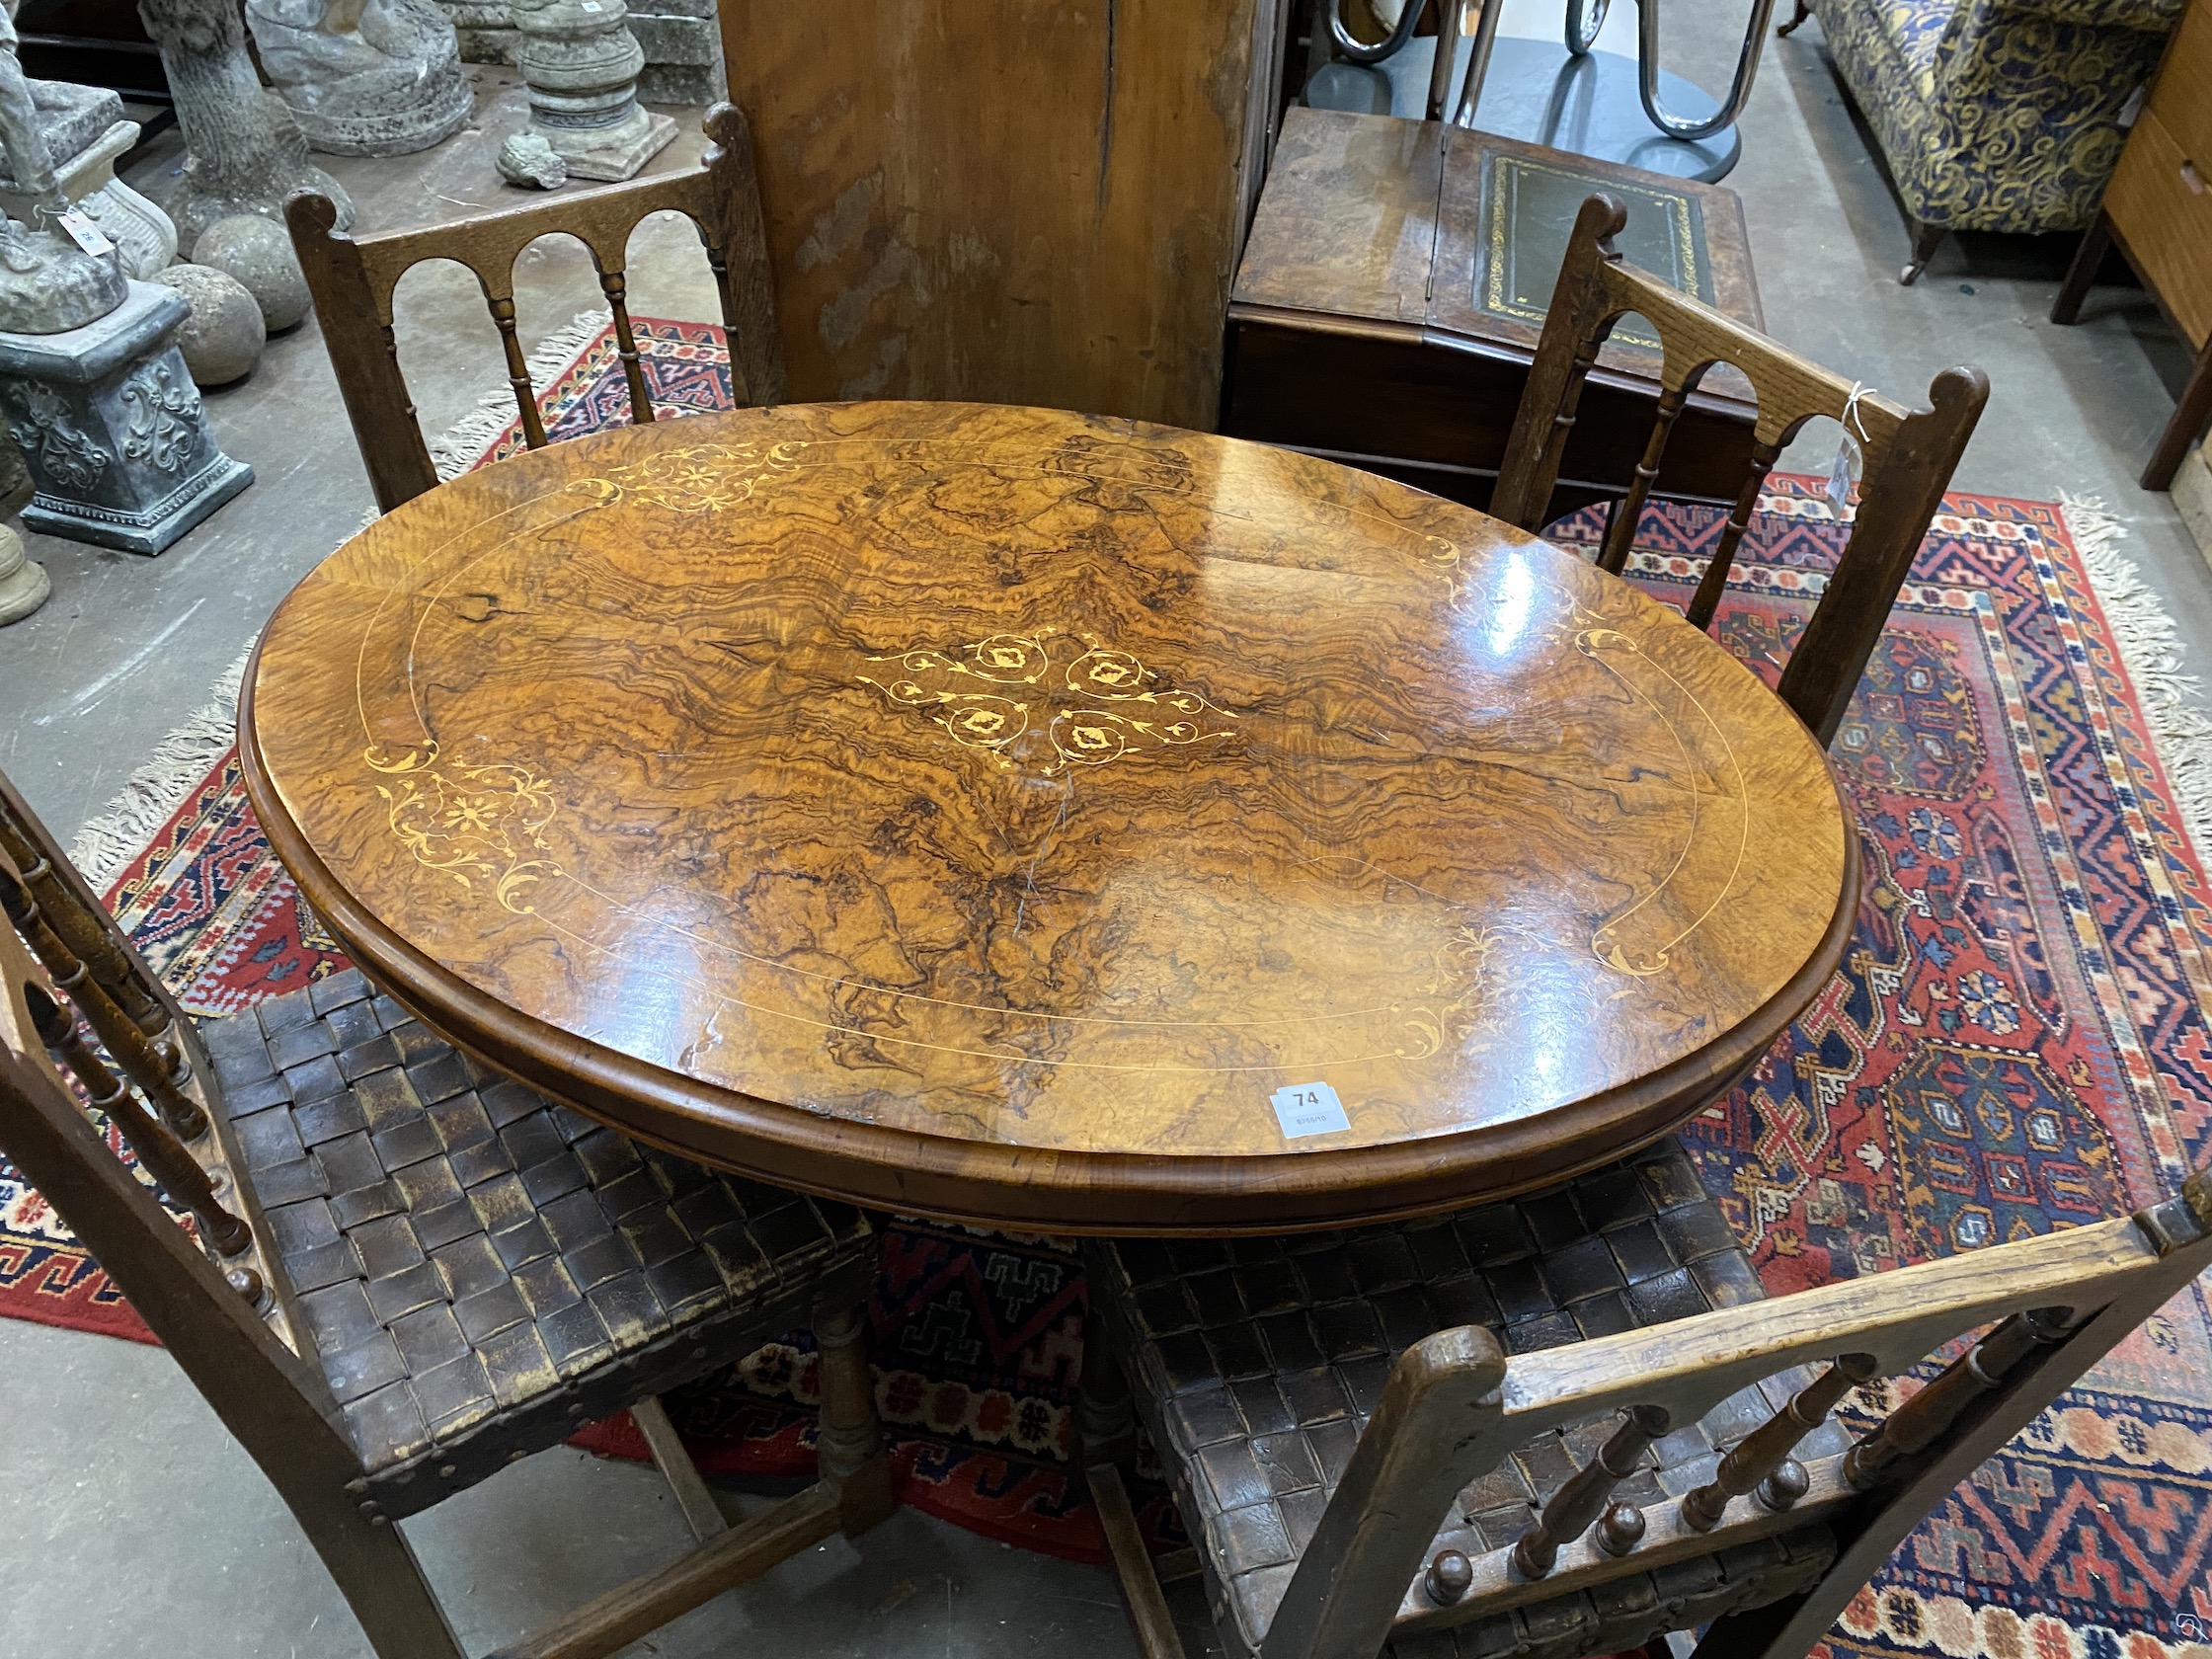 A Victorian inlaid figured walnut oval tilt top loo table, width 120cm, depth 86cm, height 72cm